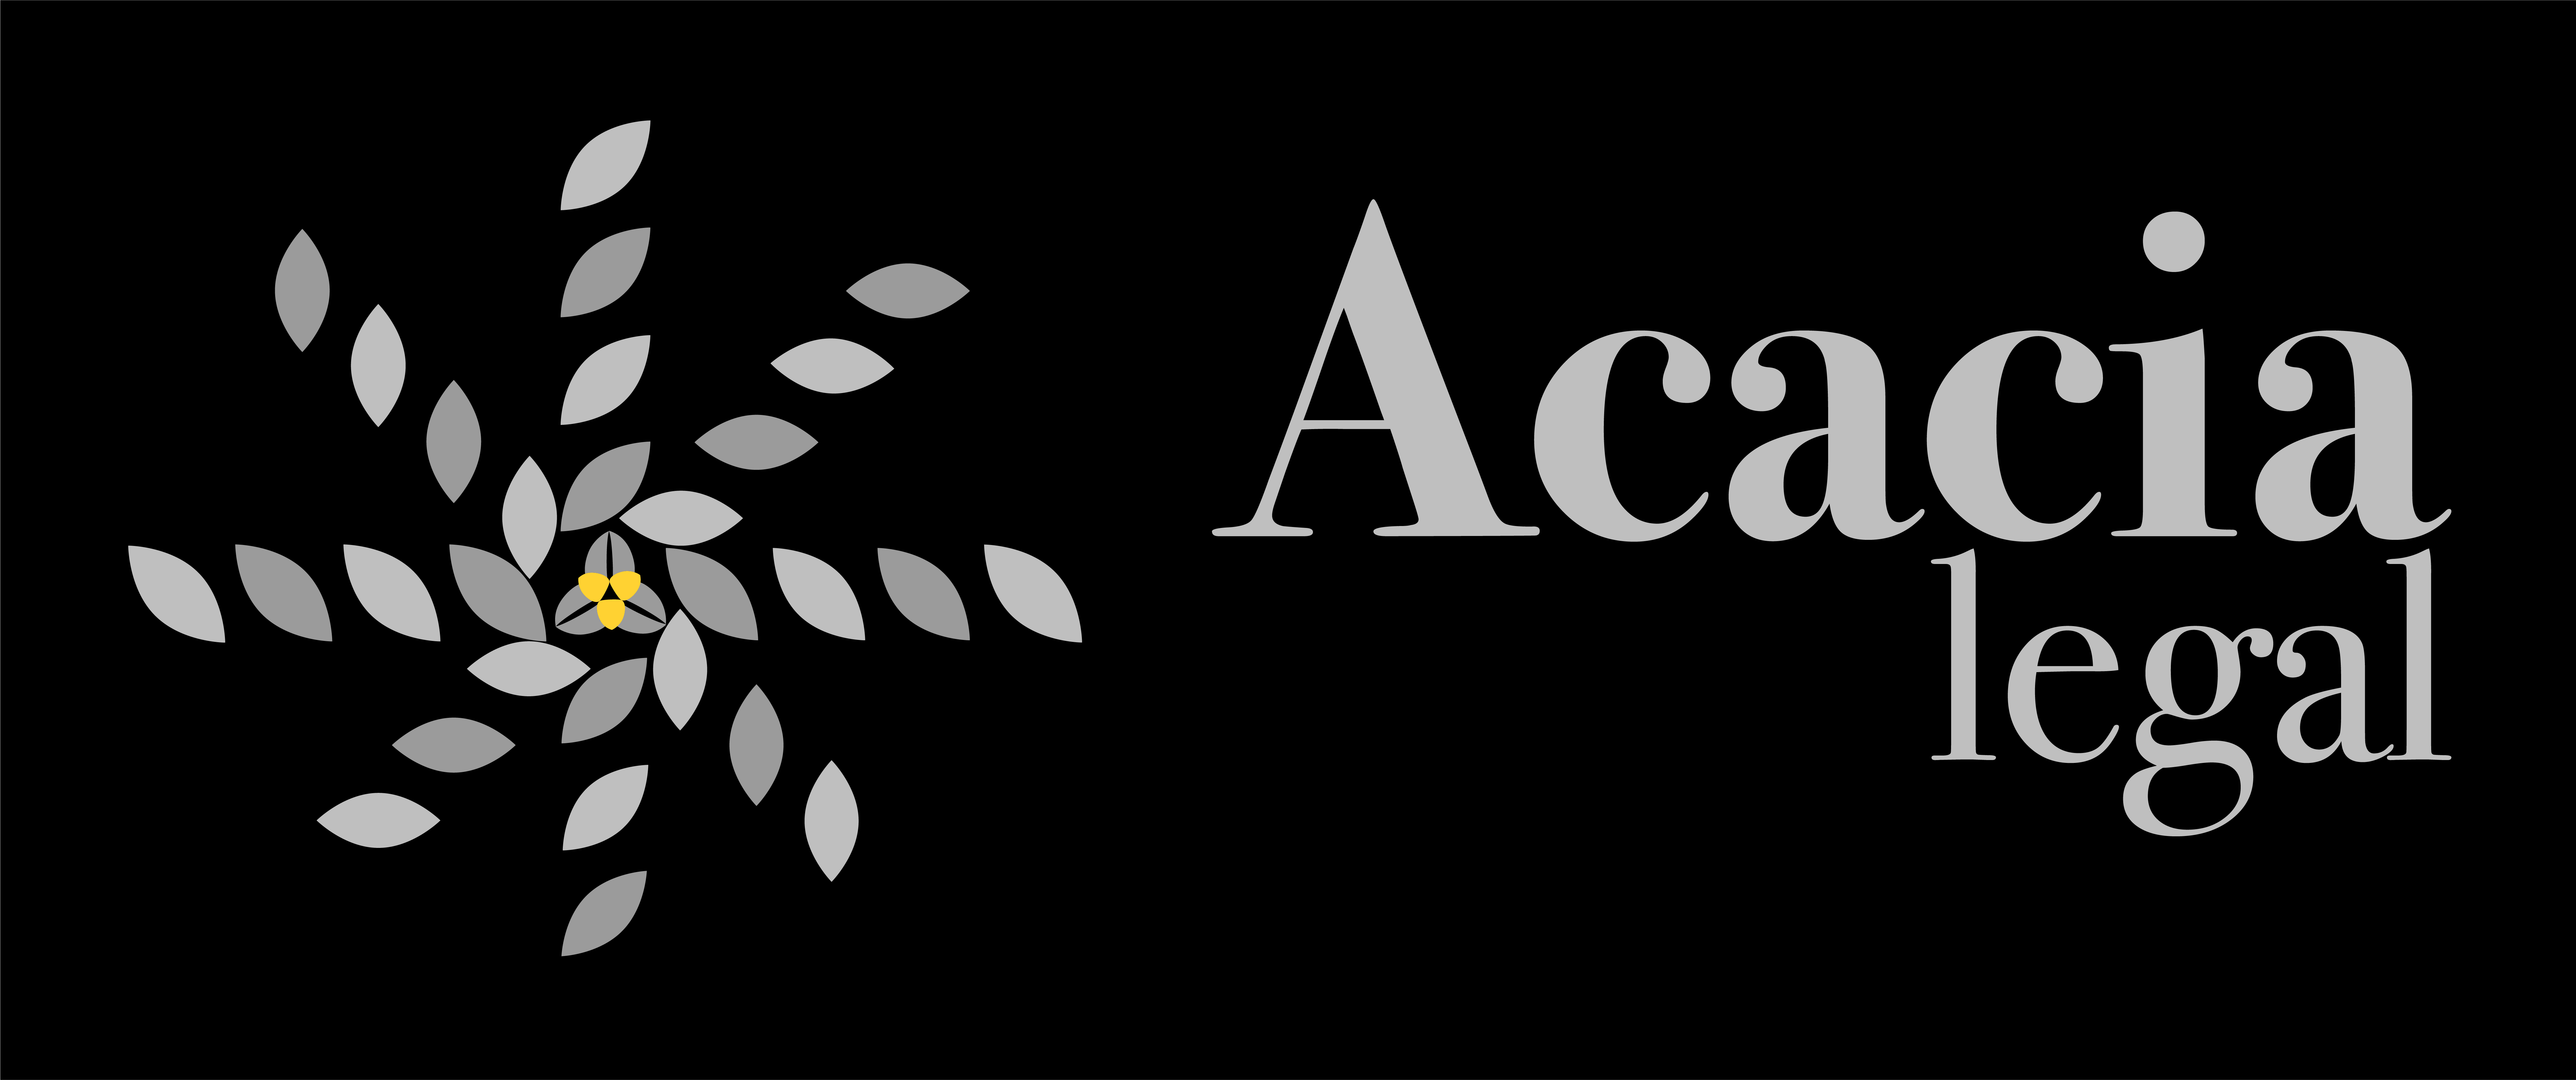 Acacia Legal - Cabinet d'affaires e& fiscal - Paris Marseille